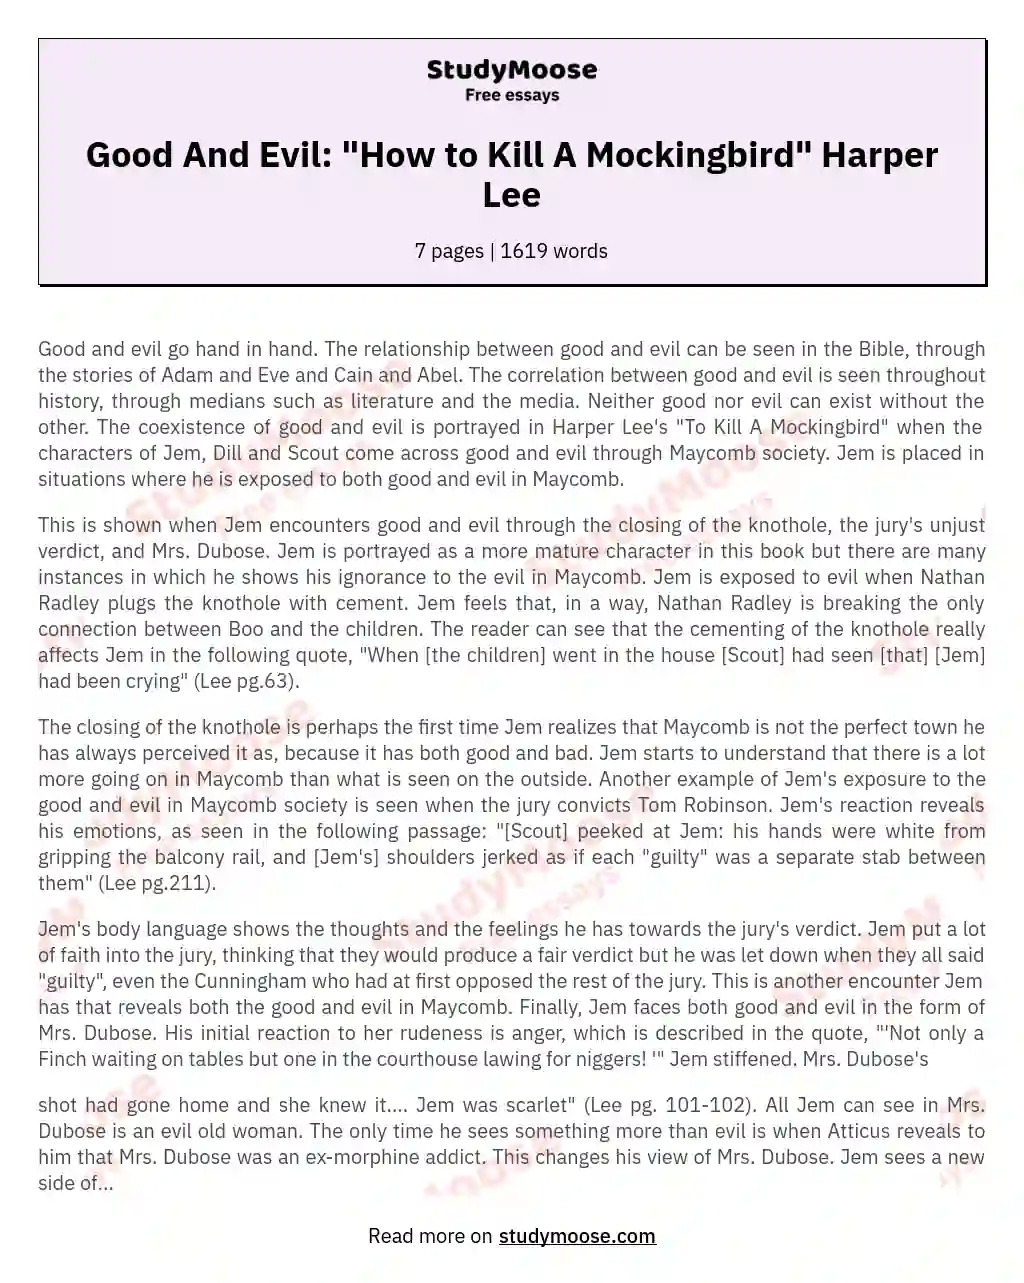 Good And Evil: "How to Kill A Mockingbird" Harper Lee essay